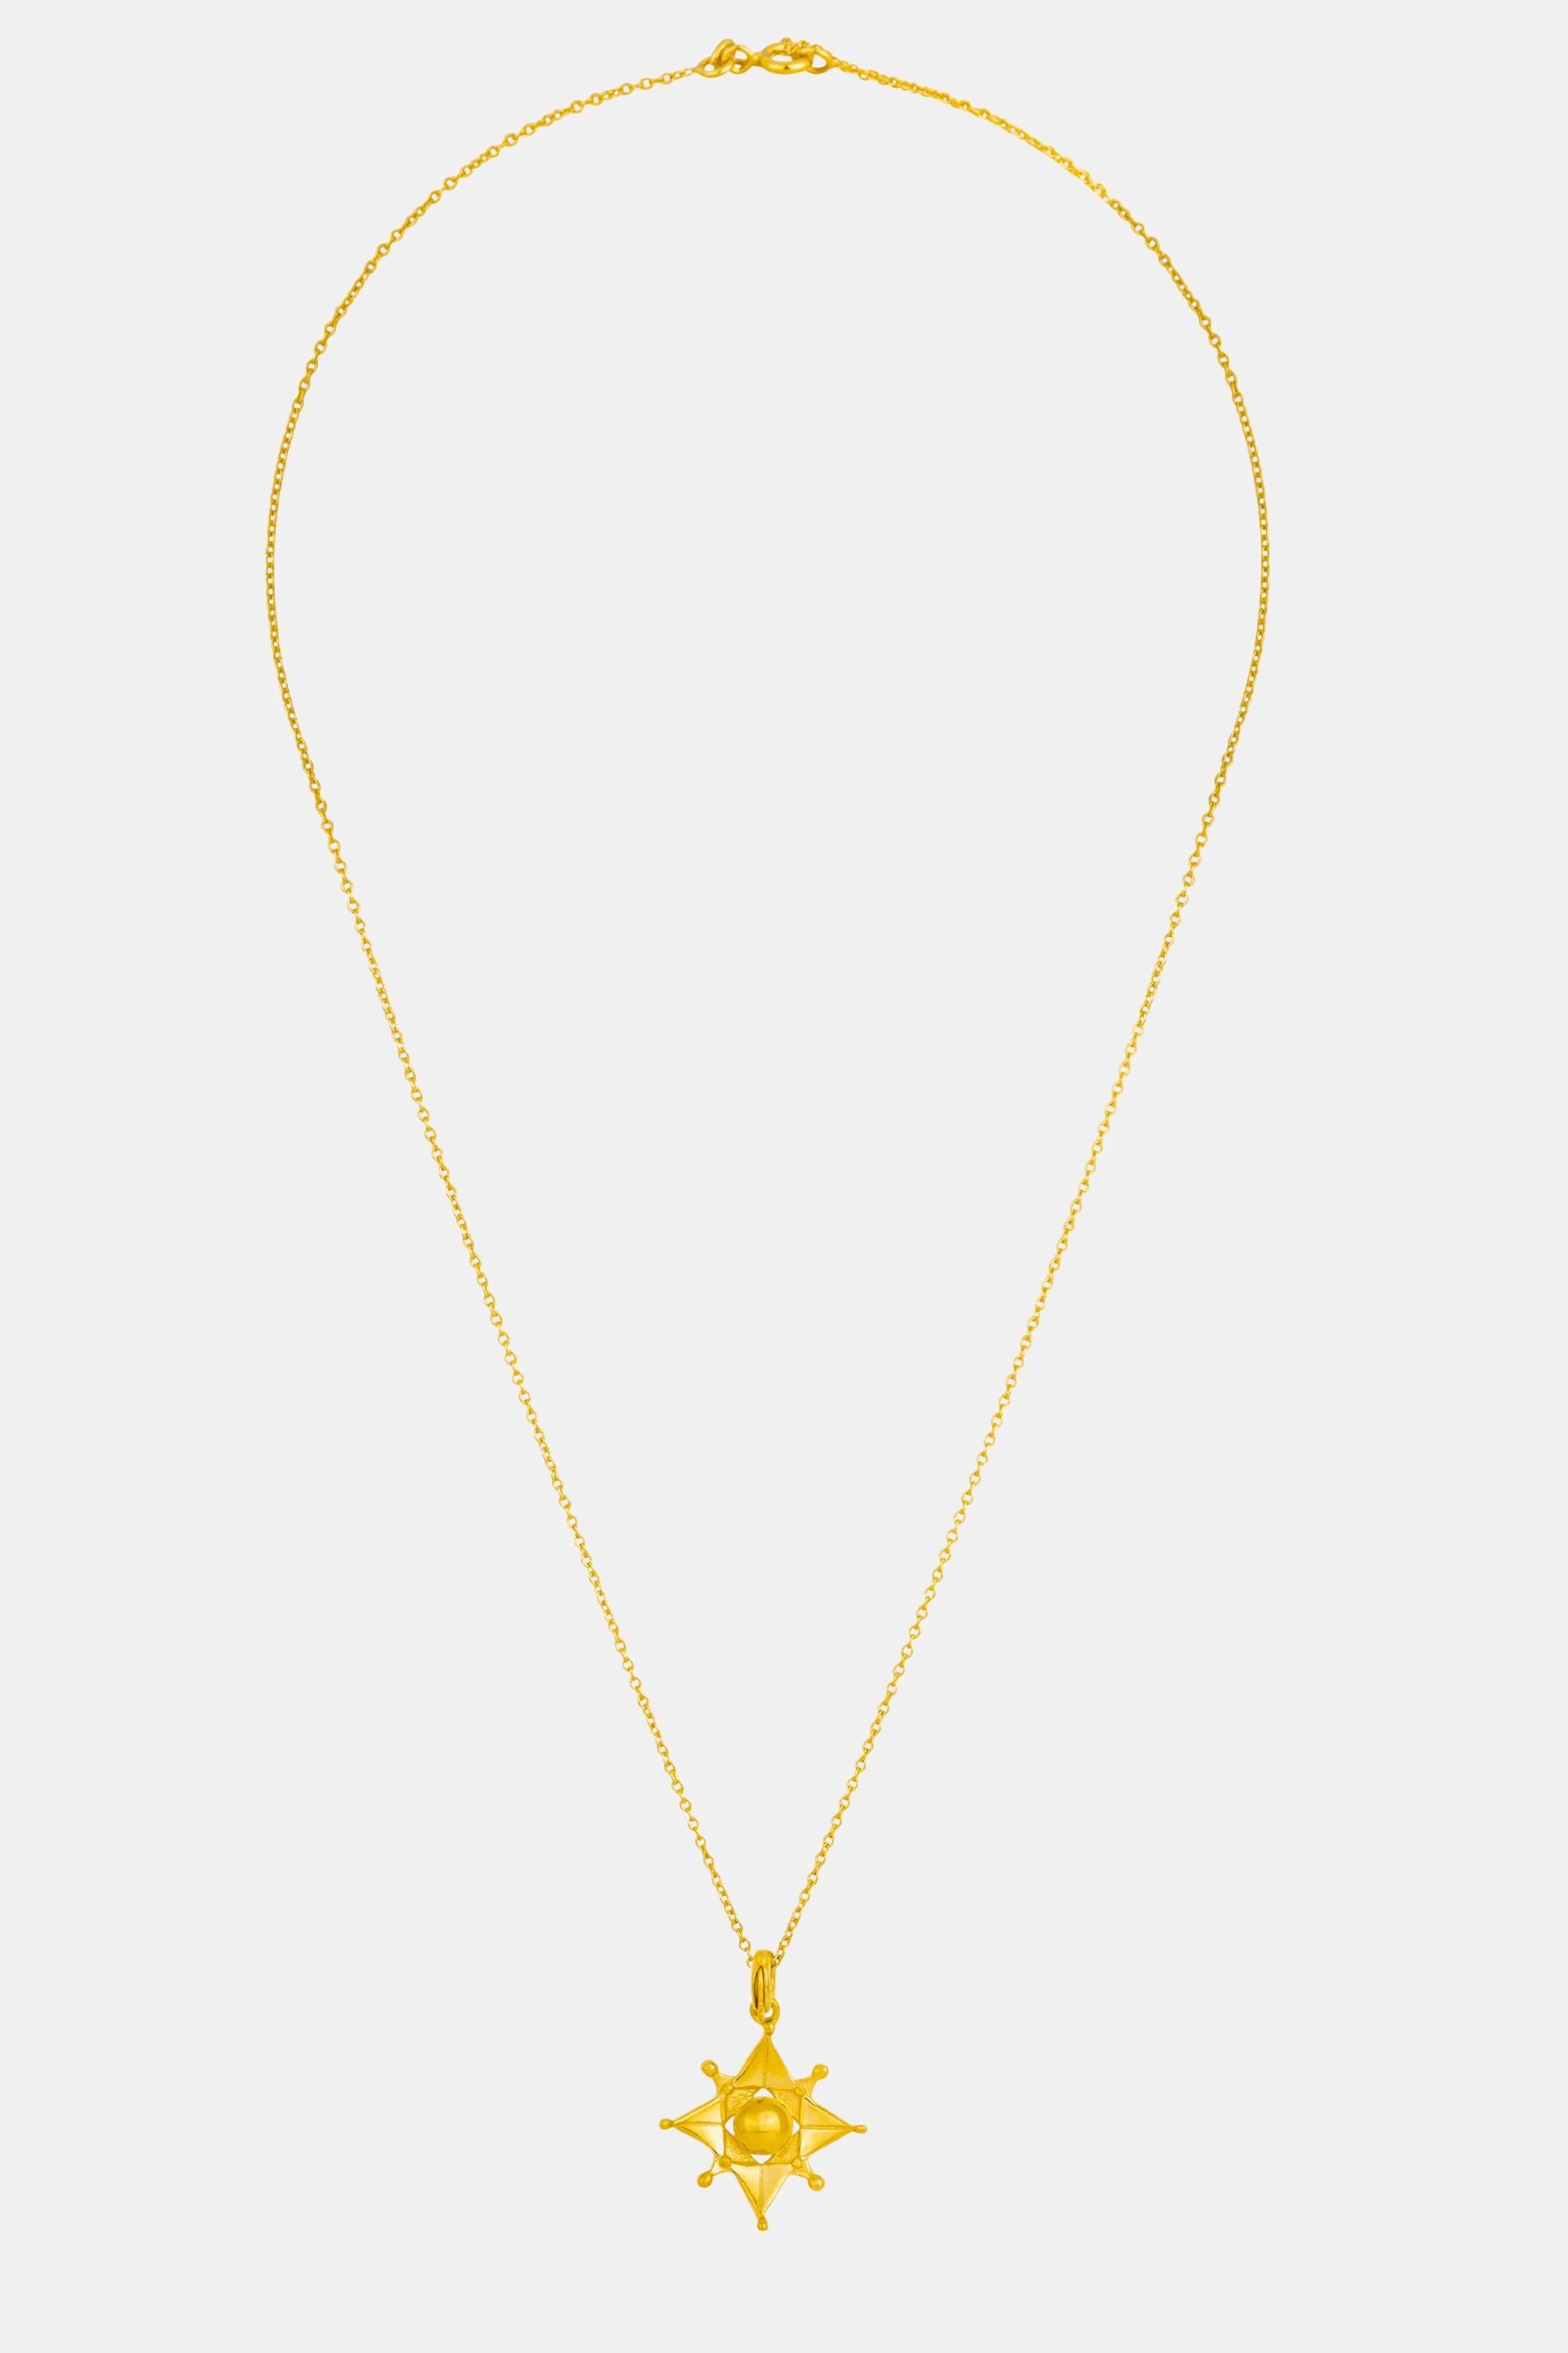 Crown 18K gold pendant necklace Mamour Paris Jewelry